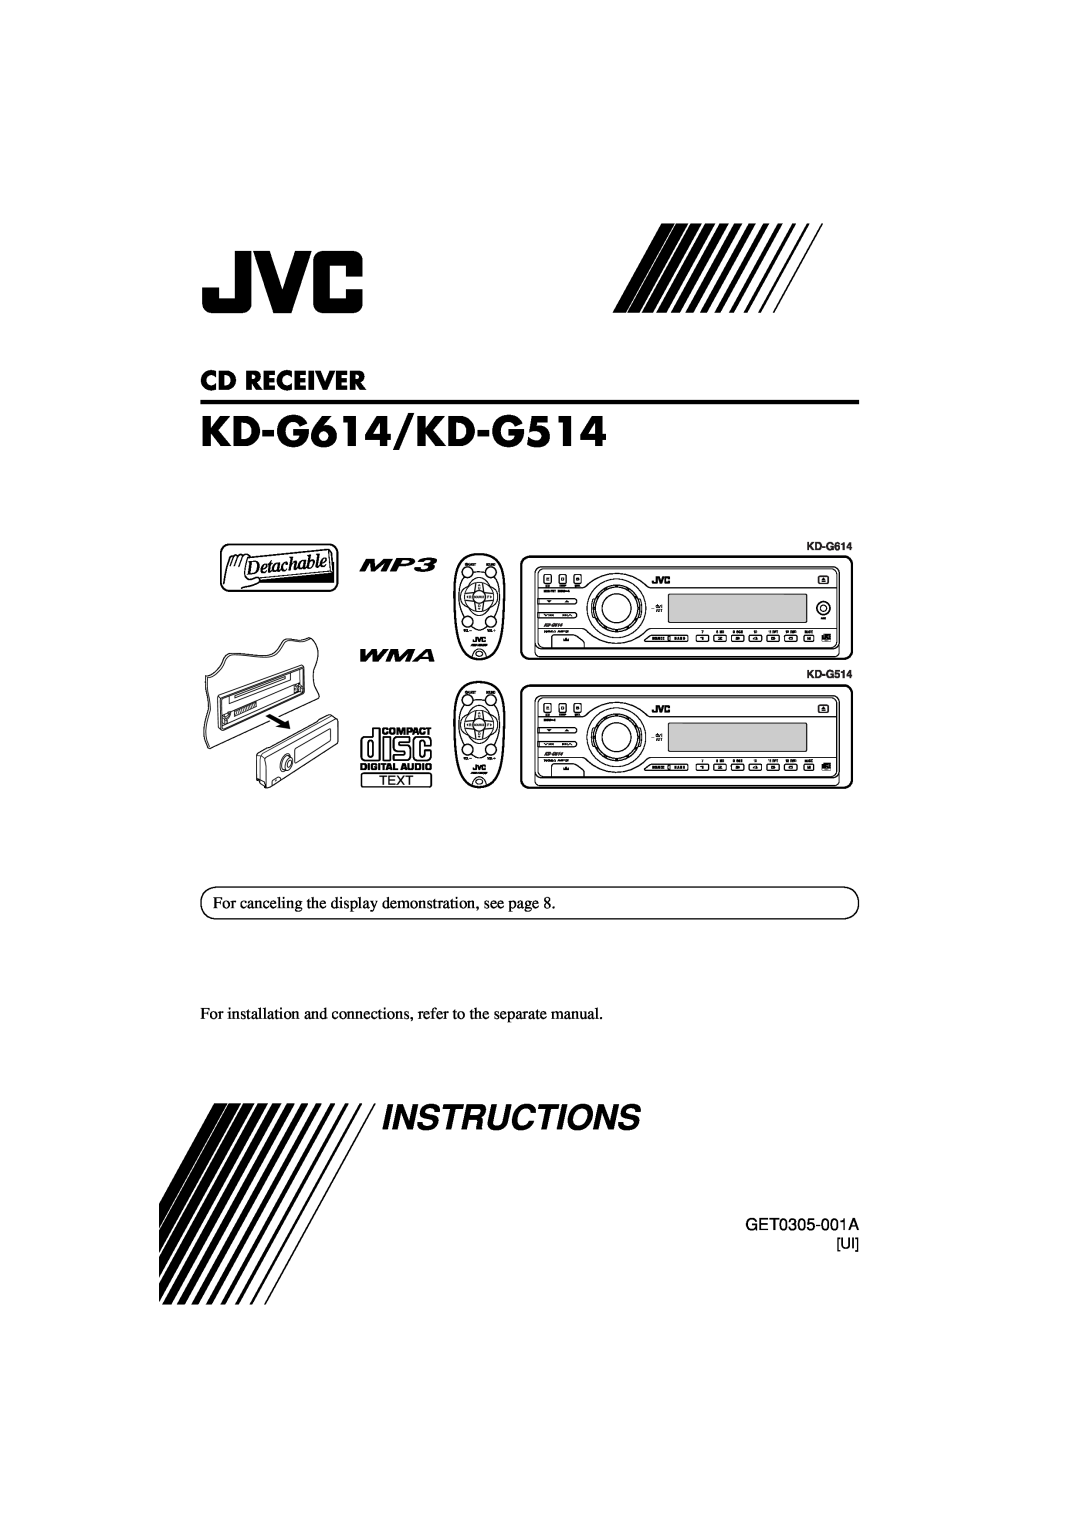 JVC GET0305-001A manual Cd Receiver, KD-G614/KD-G514, Instructions 